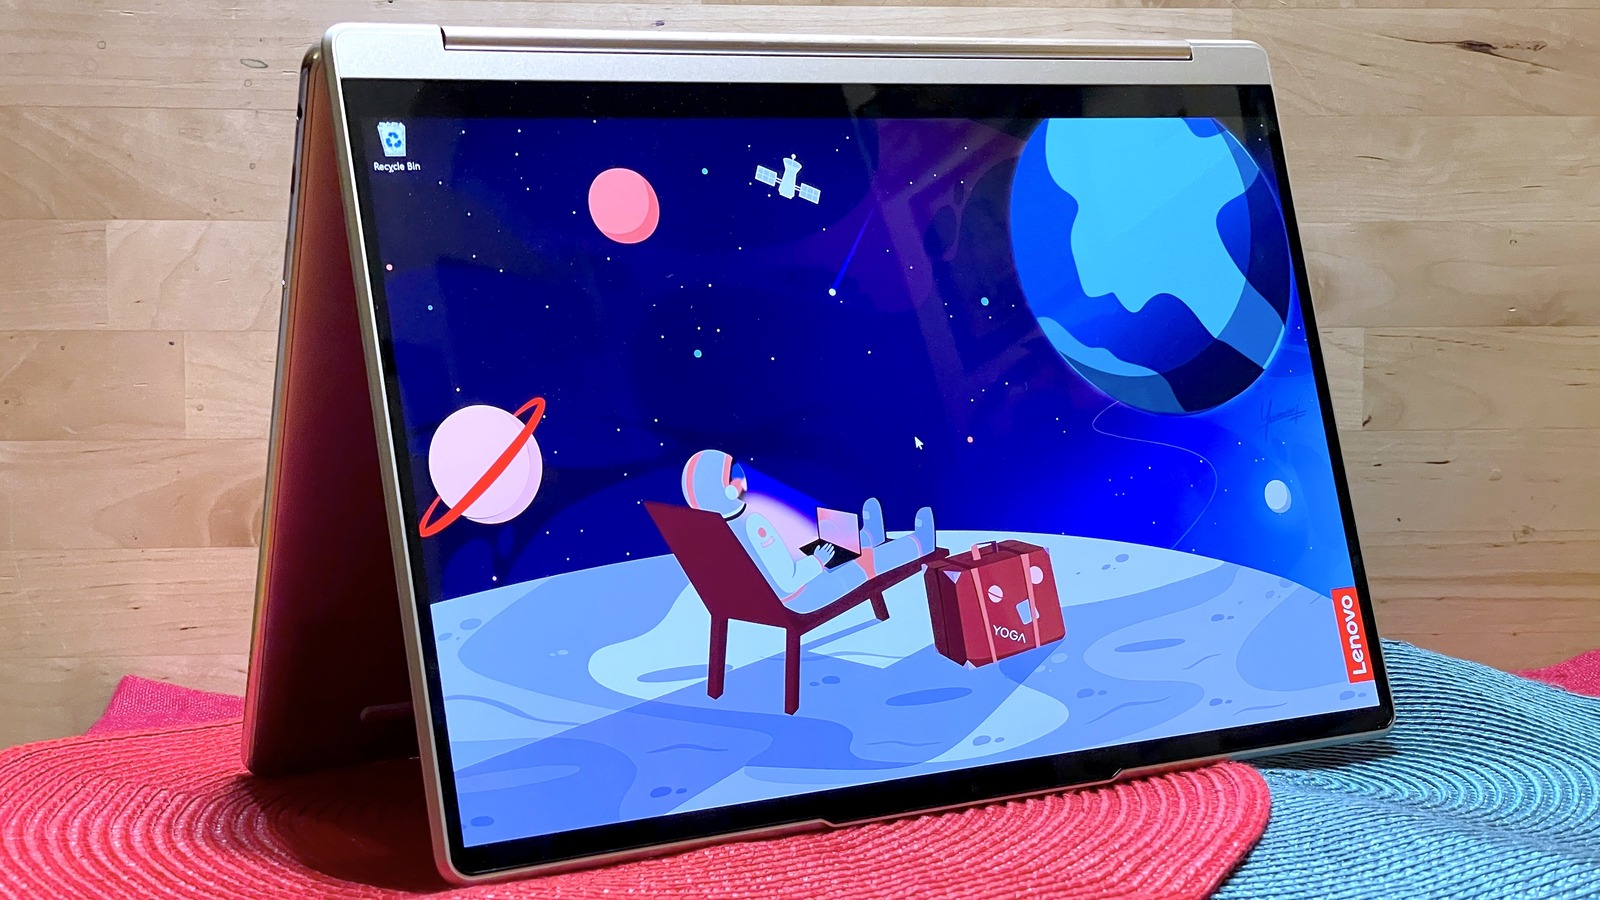 Lenovo Yoga Tablet 2 (Windows, 10-inch) review: An awkward